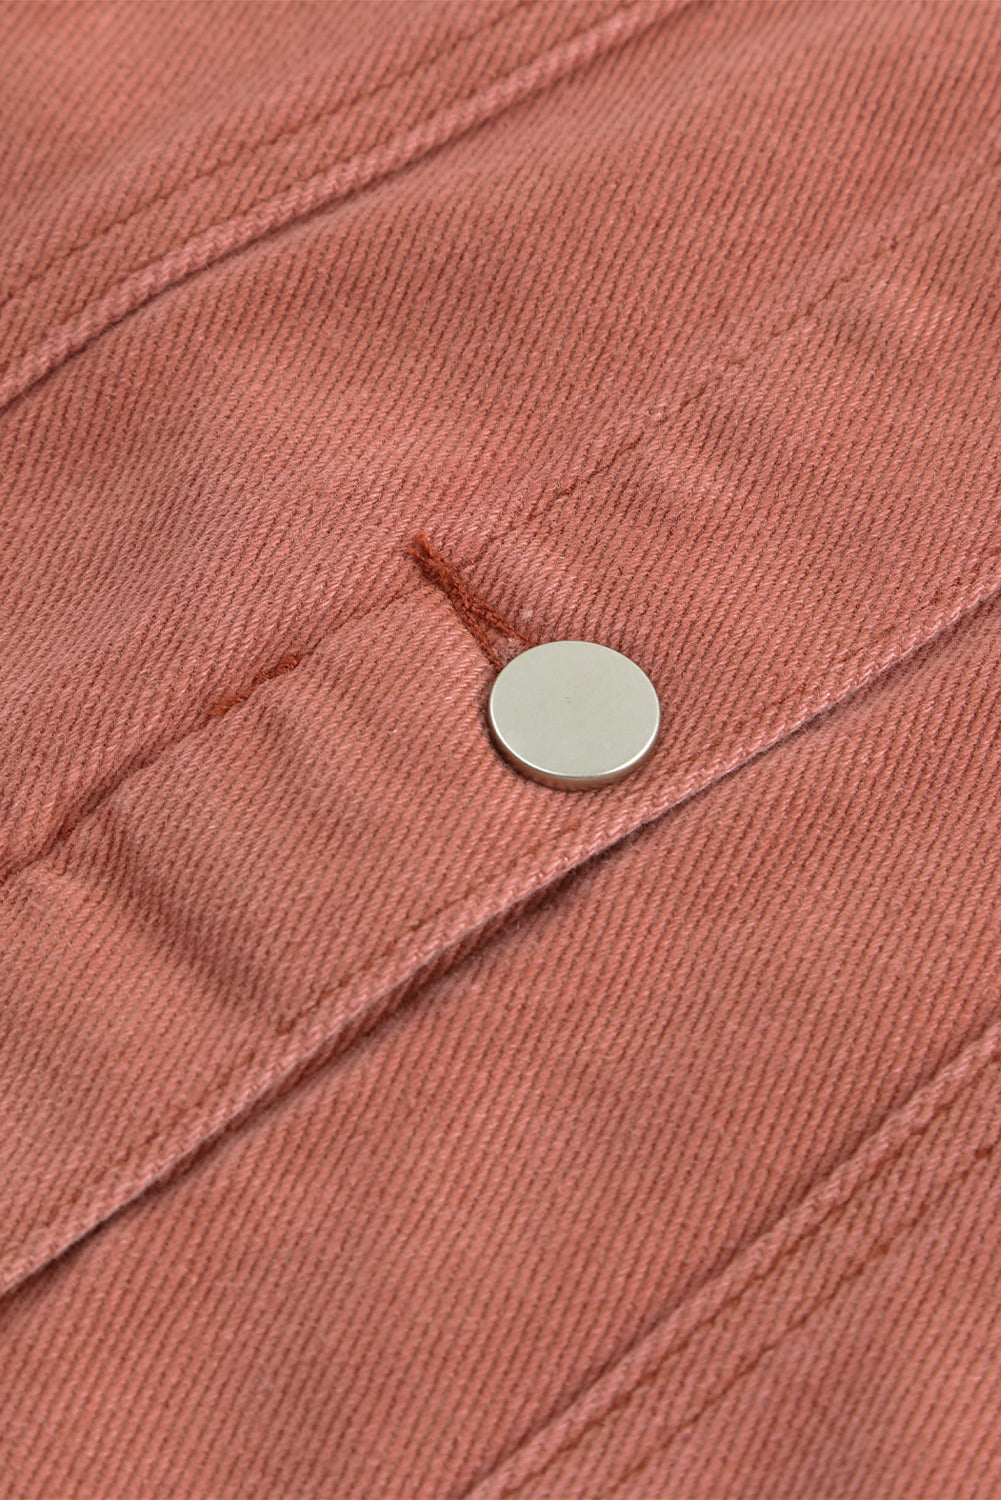 Lapel Distressed Raw Hem Buttons Denim Jacket